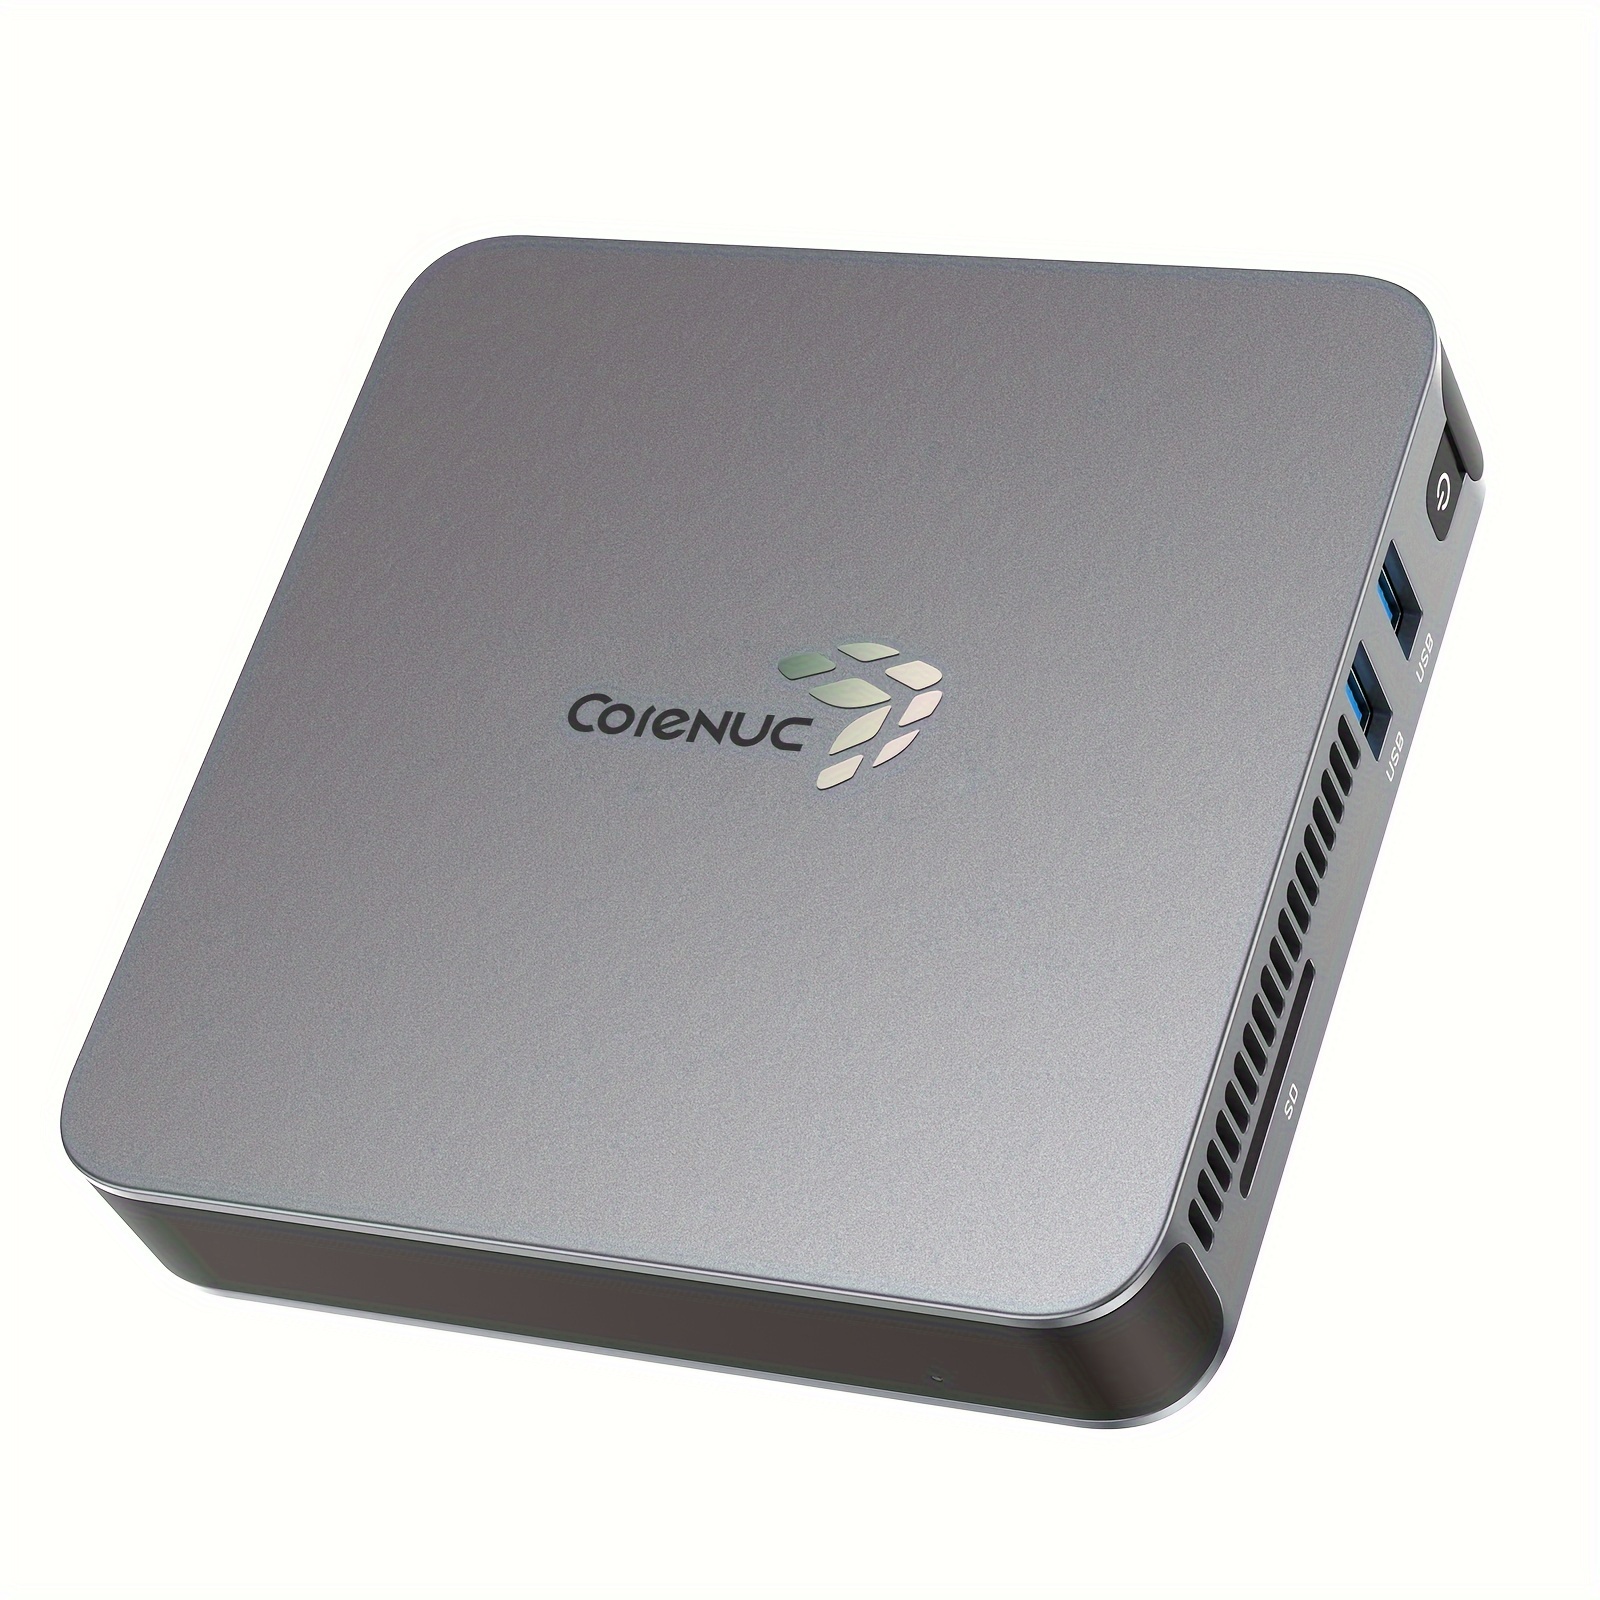 Ordinateur portable Chuwi Lapbook Pro Gemini Lake N4100 4GB 64GB Gris